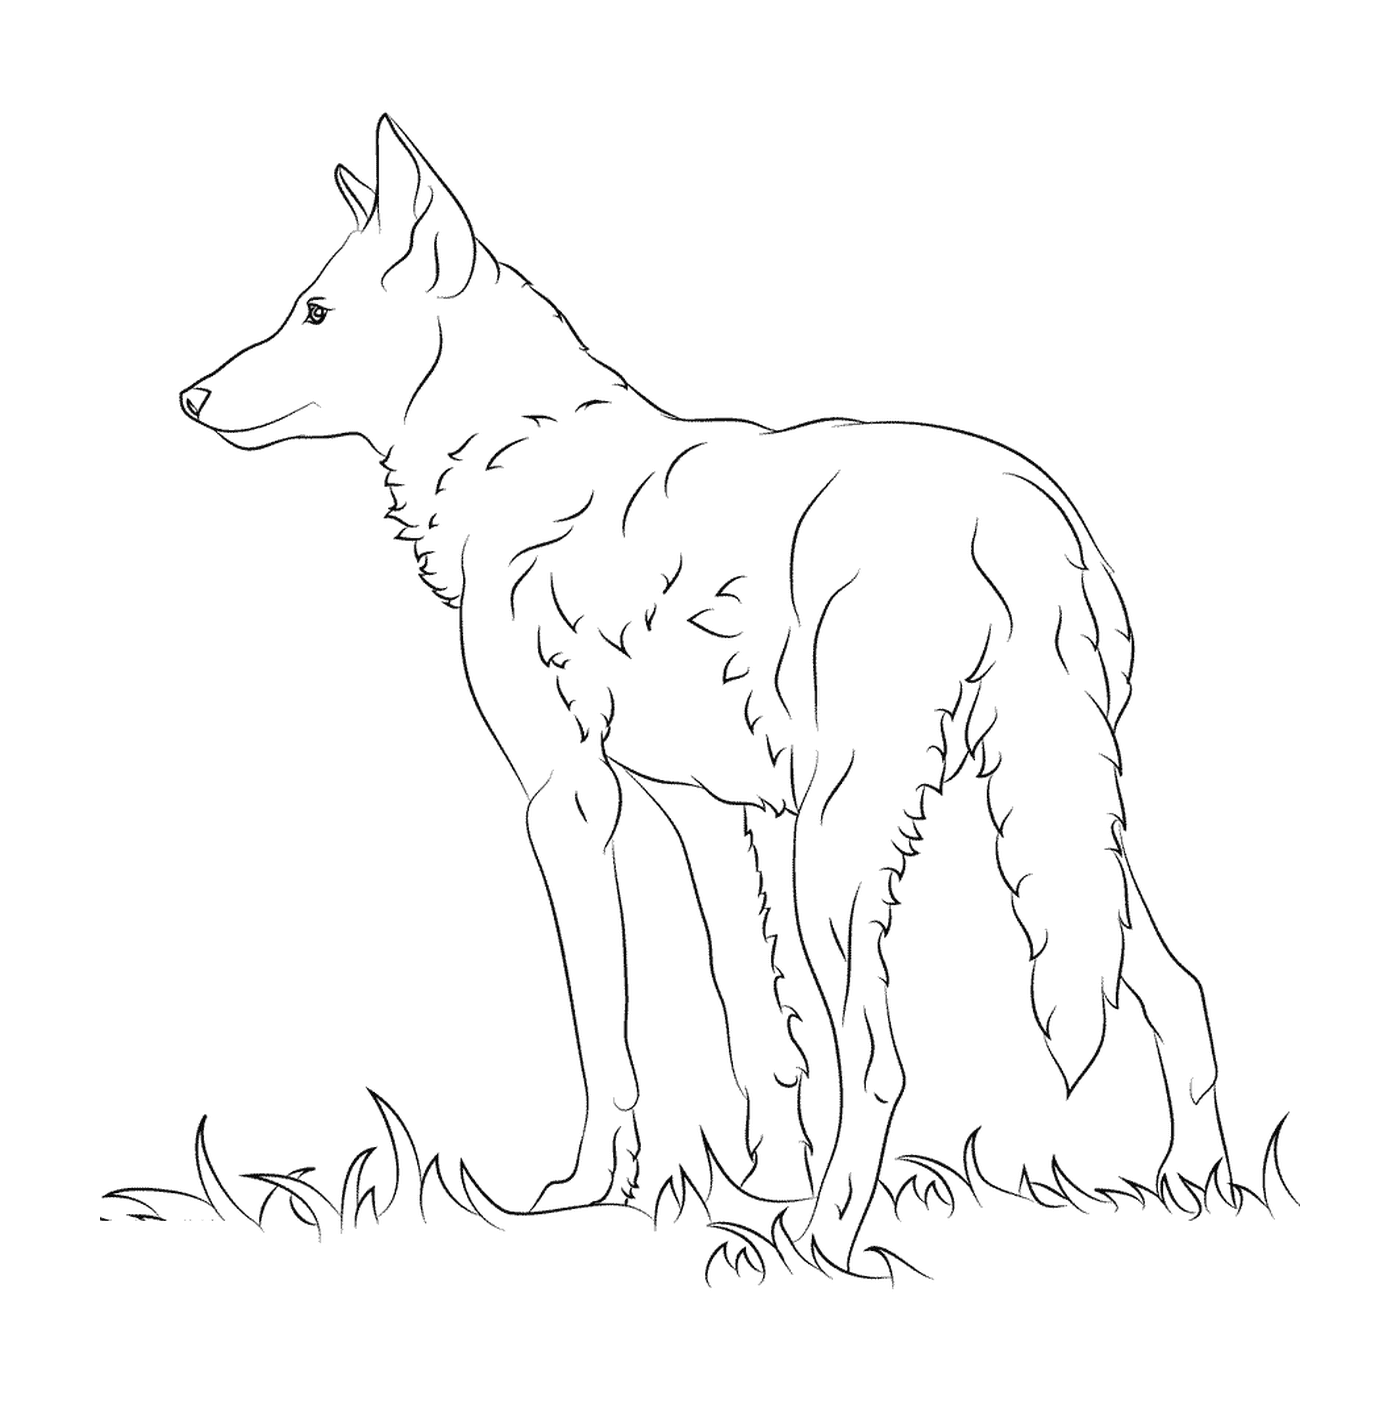  Dog in a field 